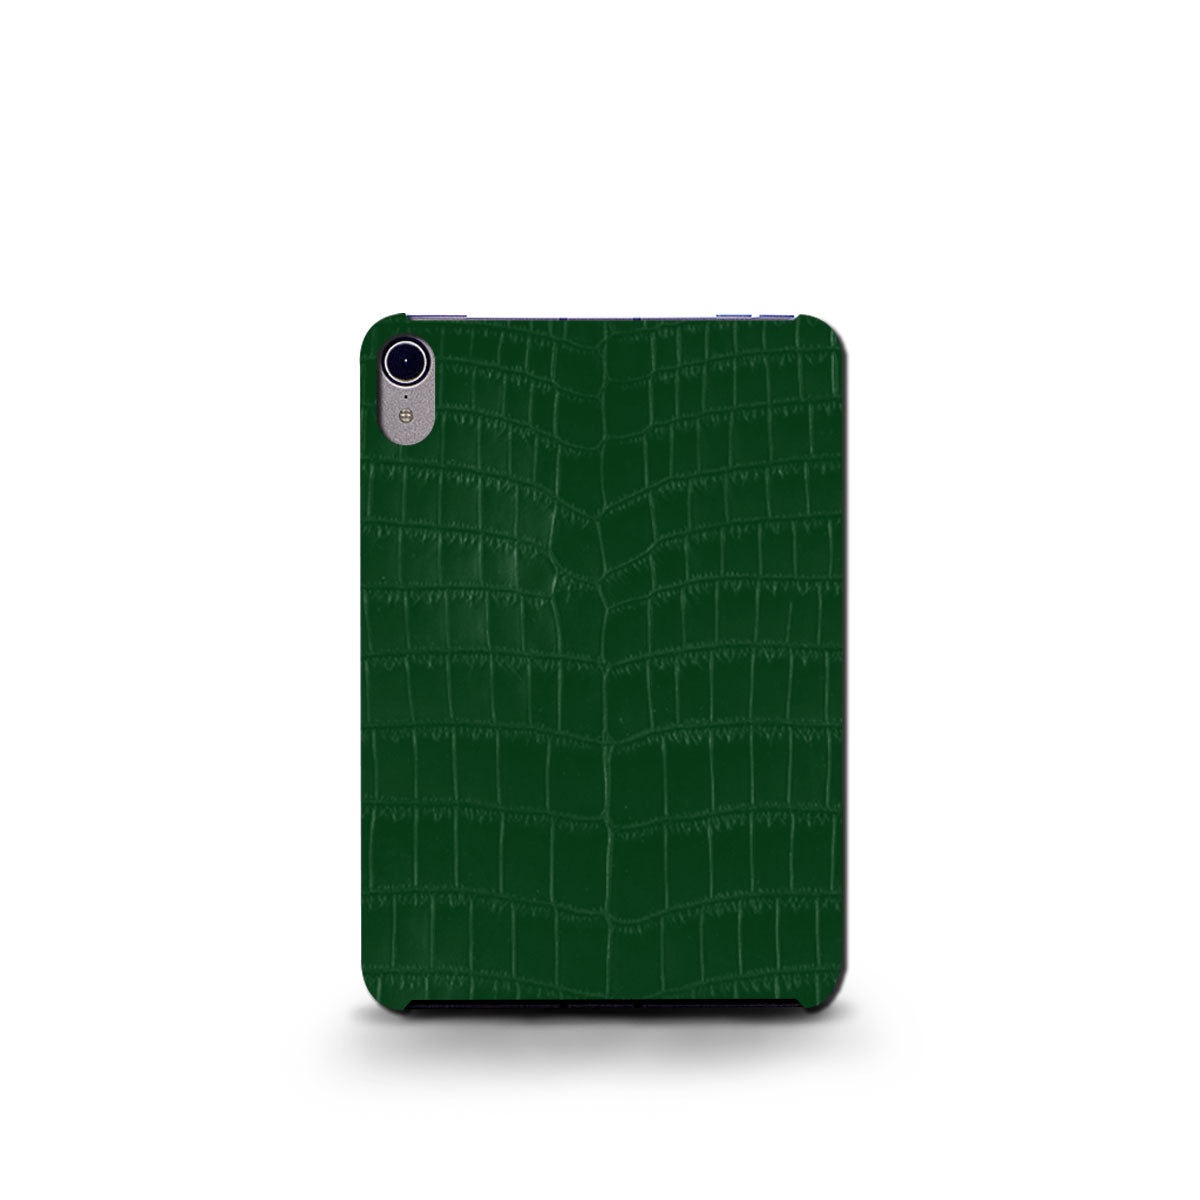 Leather iPad case / cover - iPad Mini ( 6th generation ) - Genuine alligator